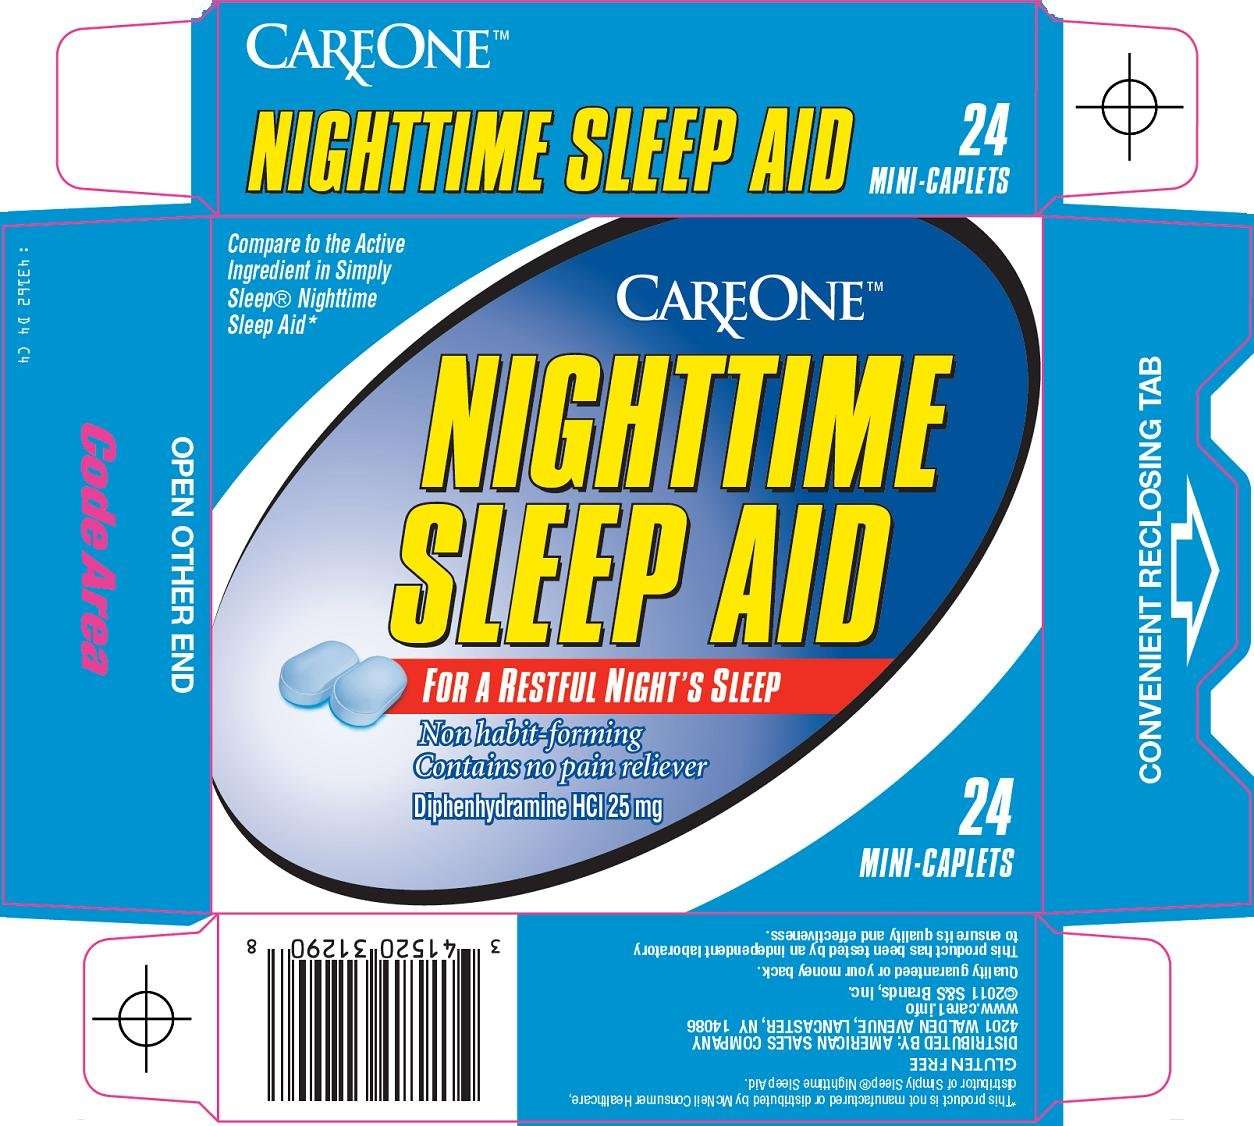 careone nighttime sleep aid